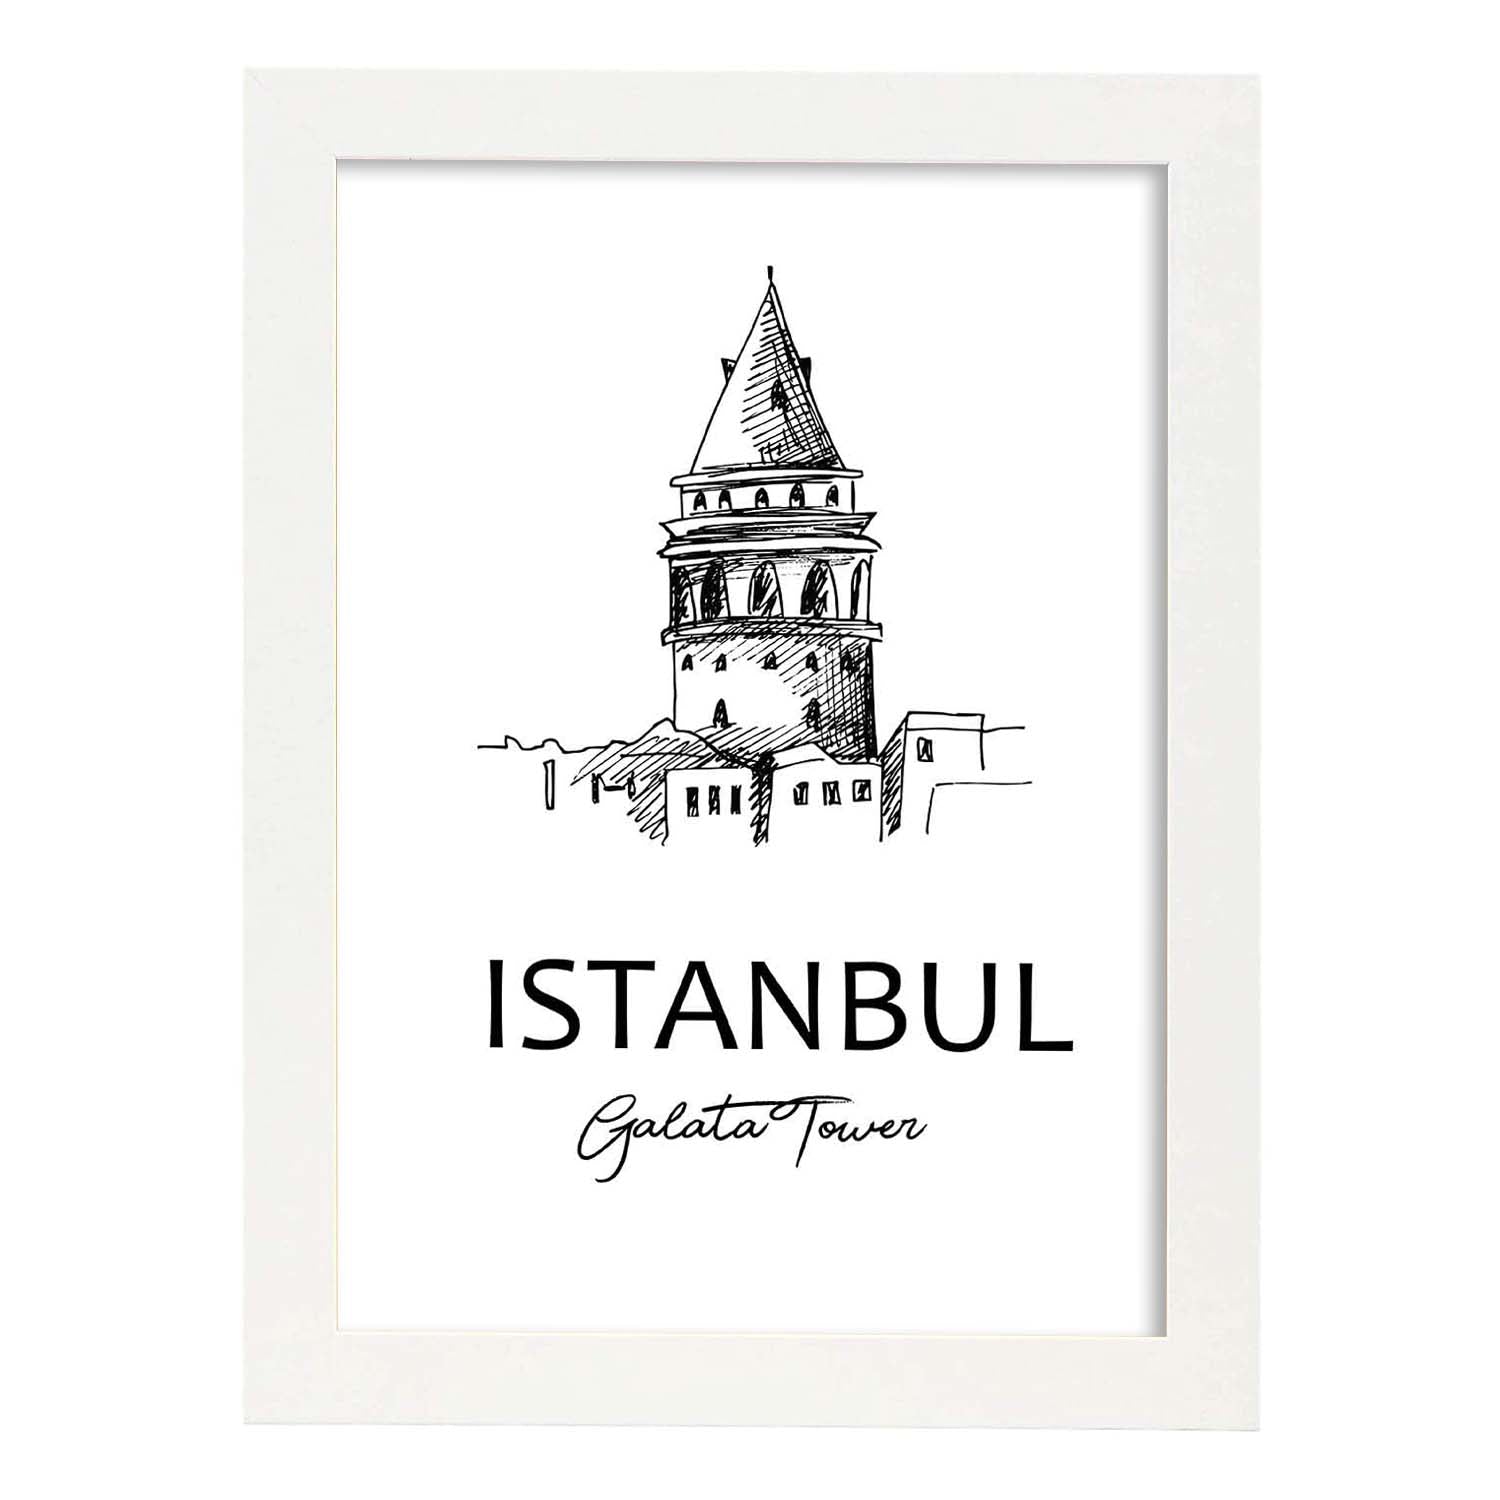 Poster de Estambul - Torre galata. Láminas con monumentos de ciudades.-Artwork-Nacnic-A4-Marco Blanco-Nacnic Estudio SL